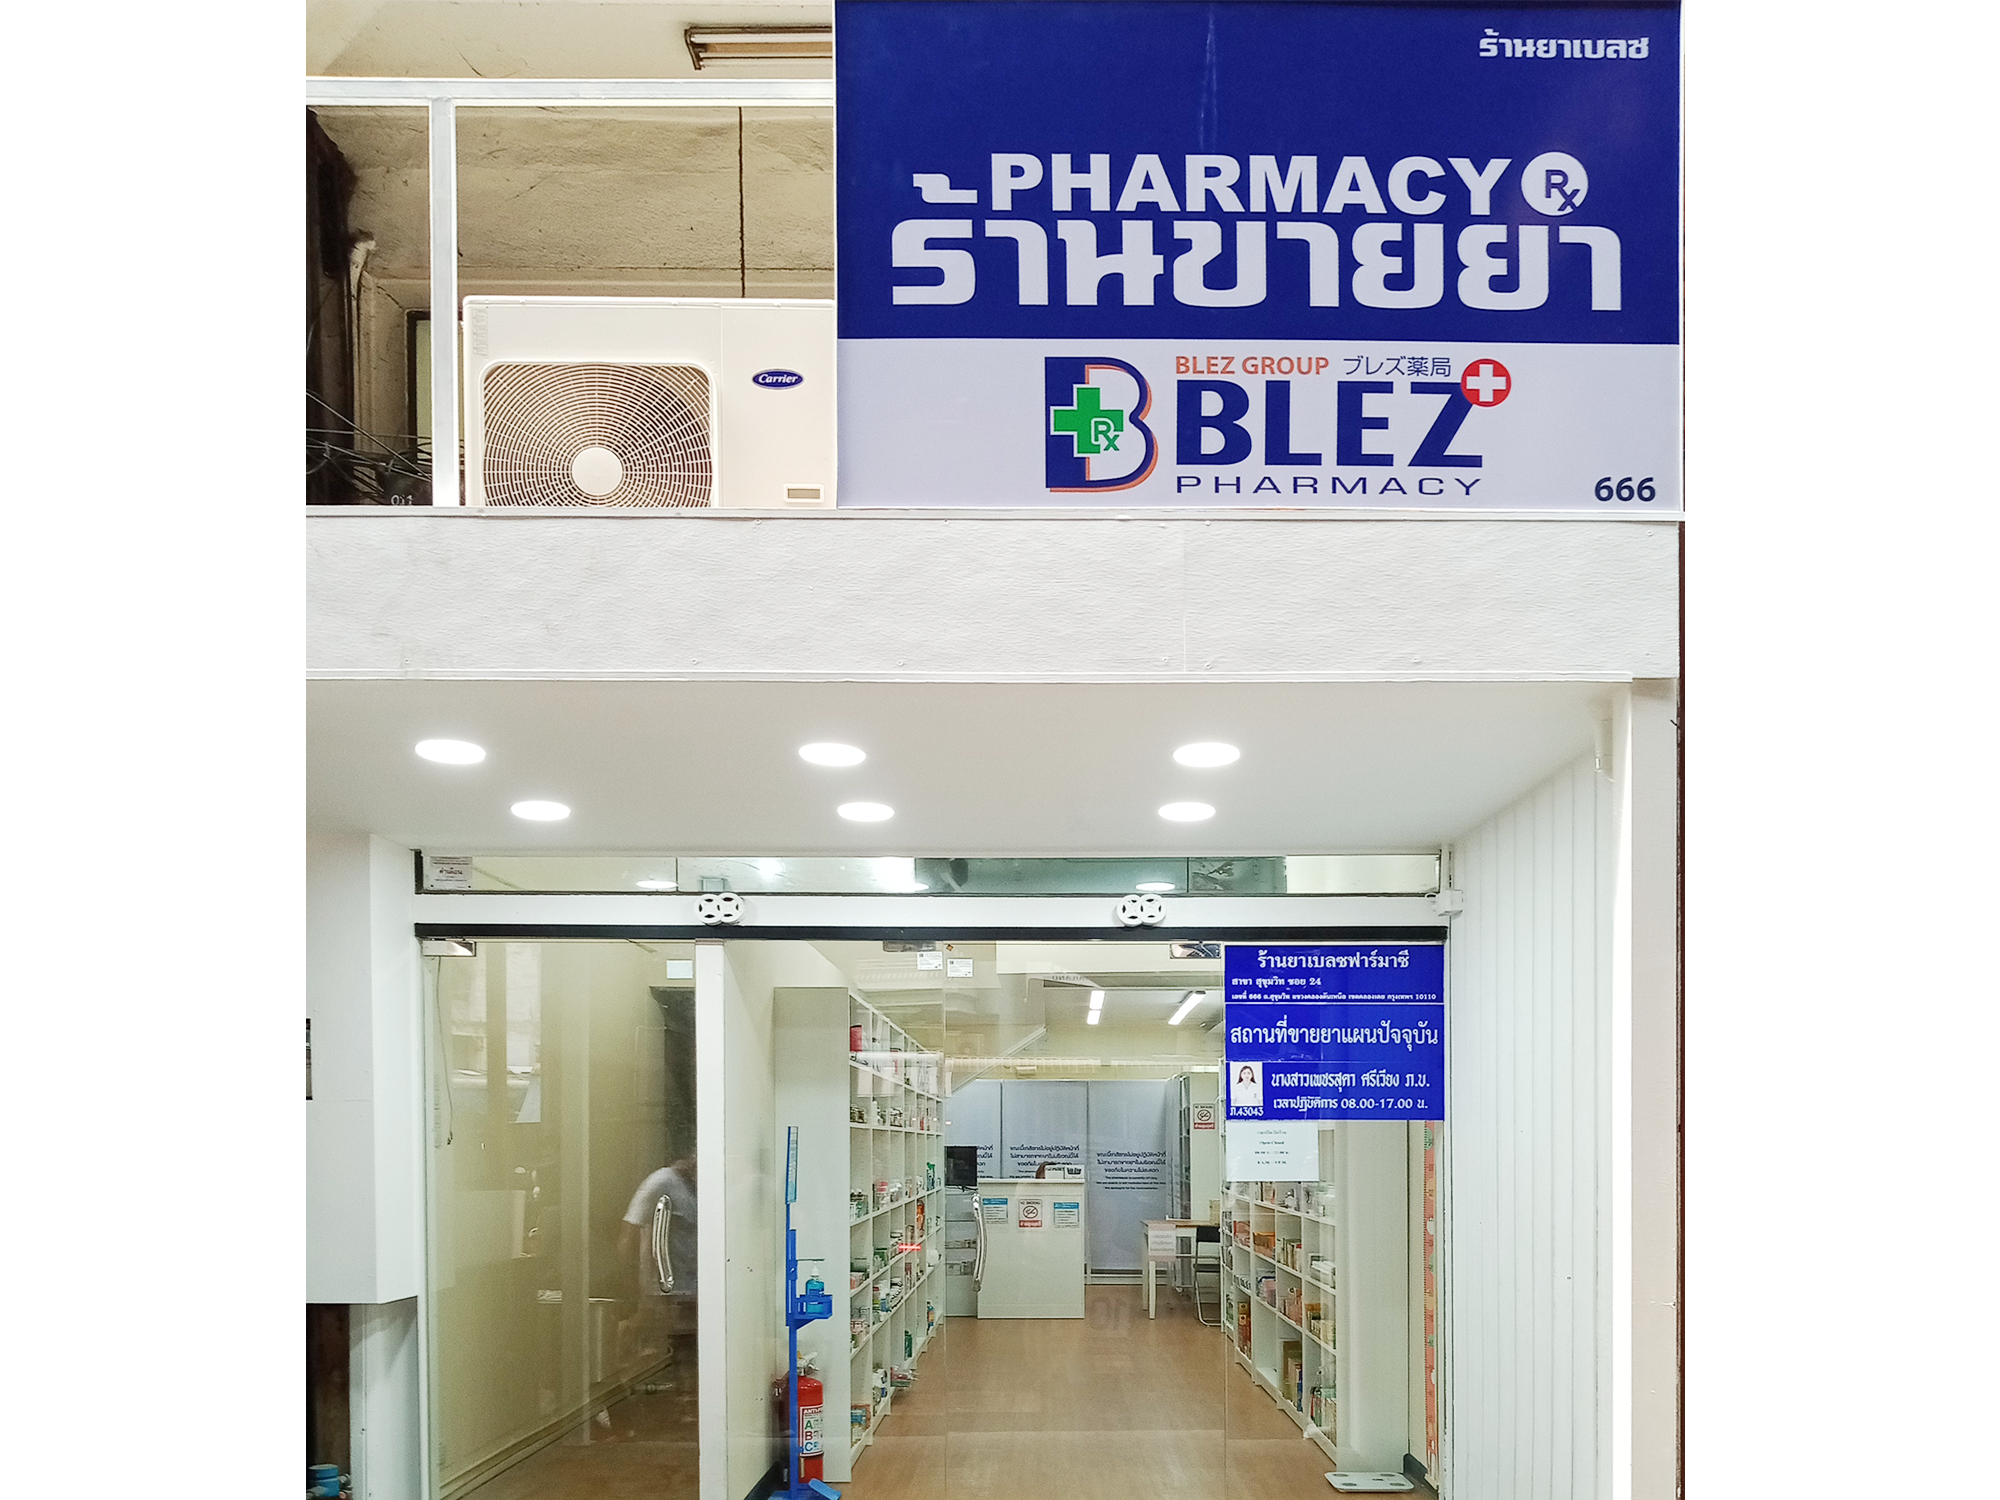 BLEZ Pharmacy soi24 shop image